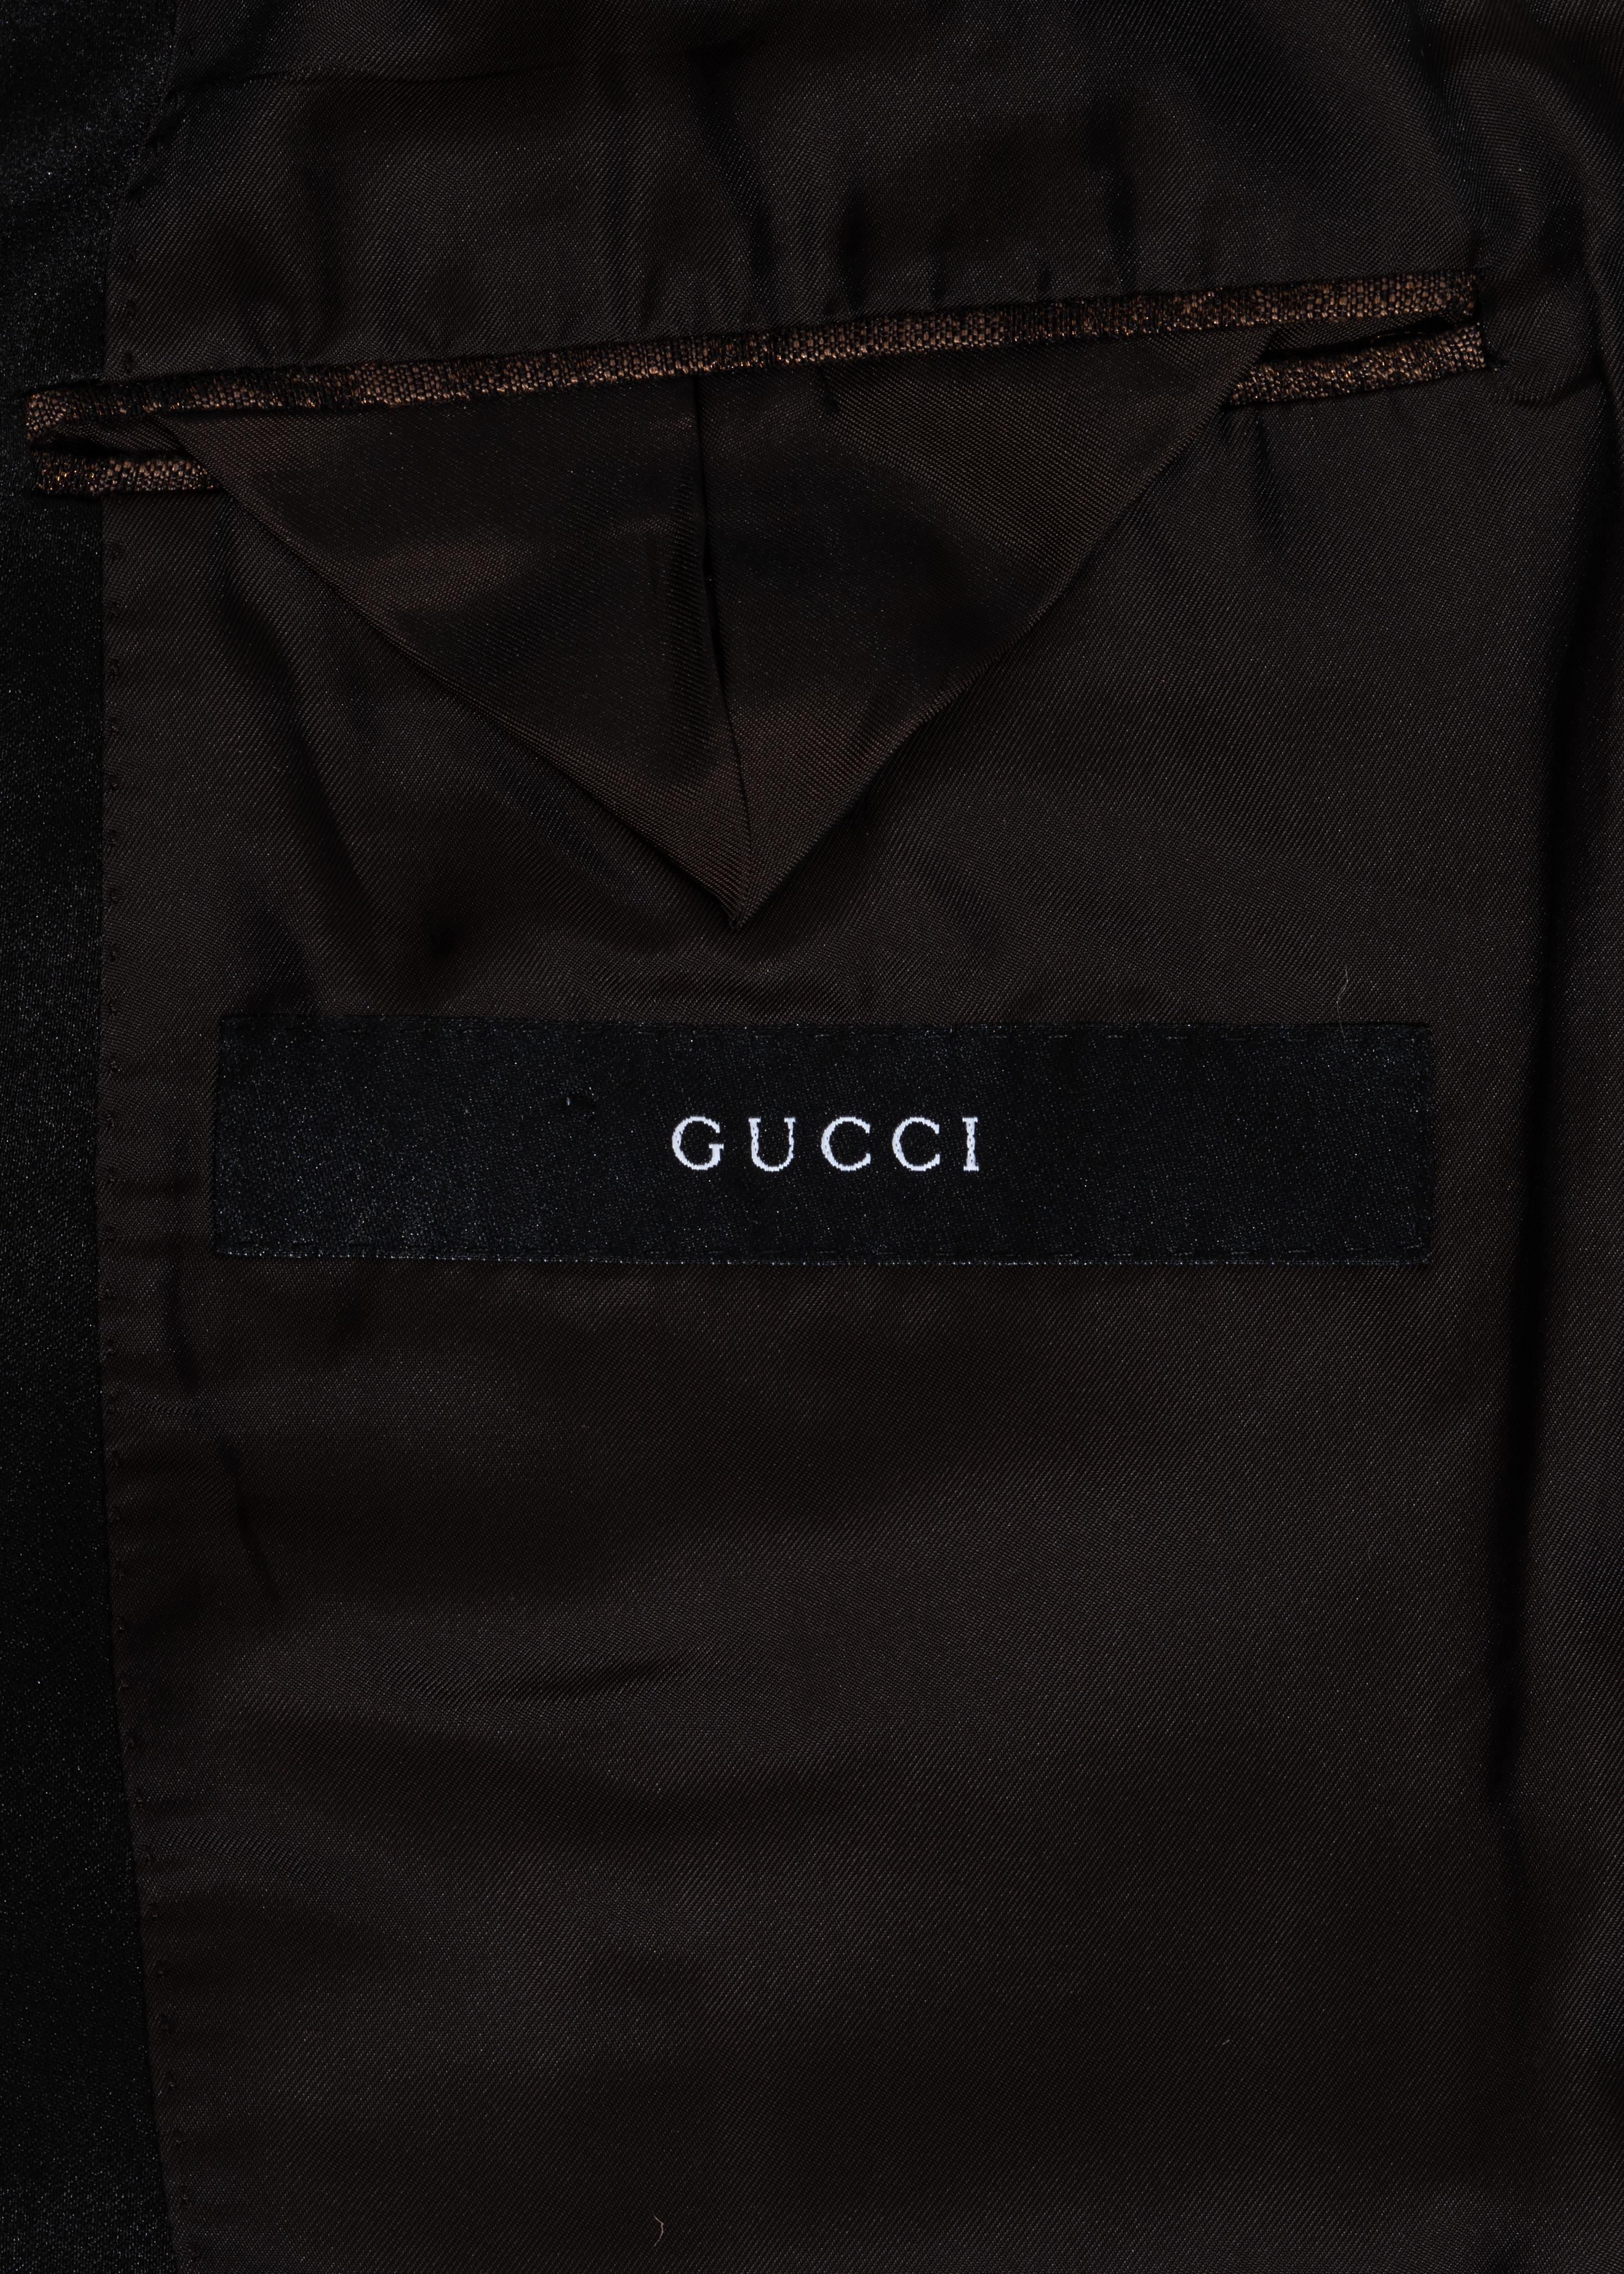 Men's Gucci bronze jacquard evening blazer jacket, ss 2005 For Sale 1